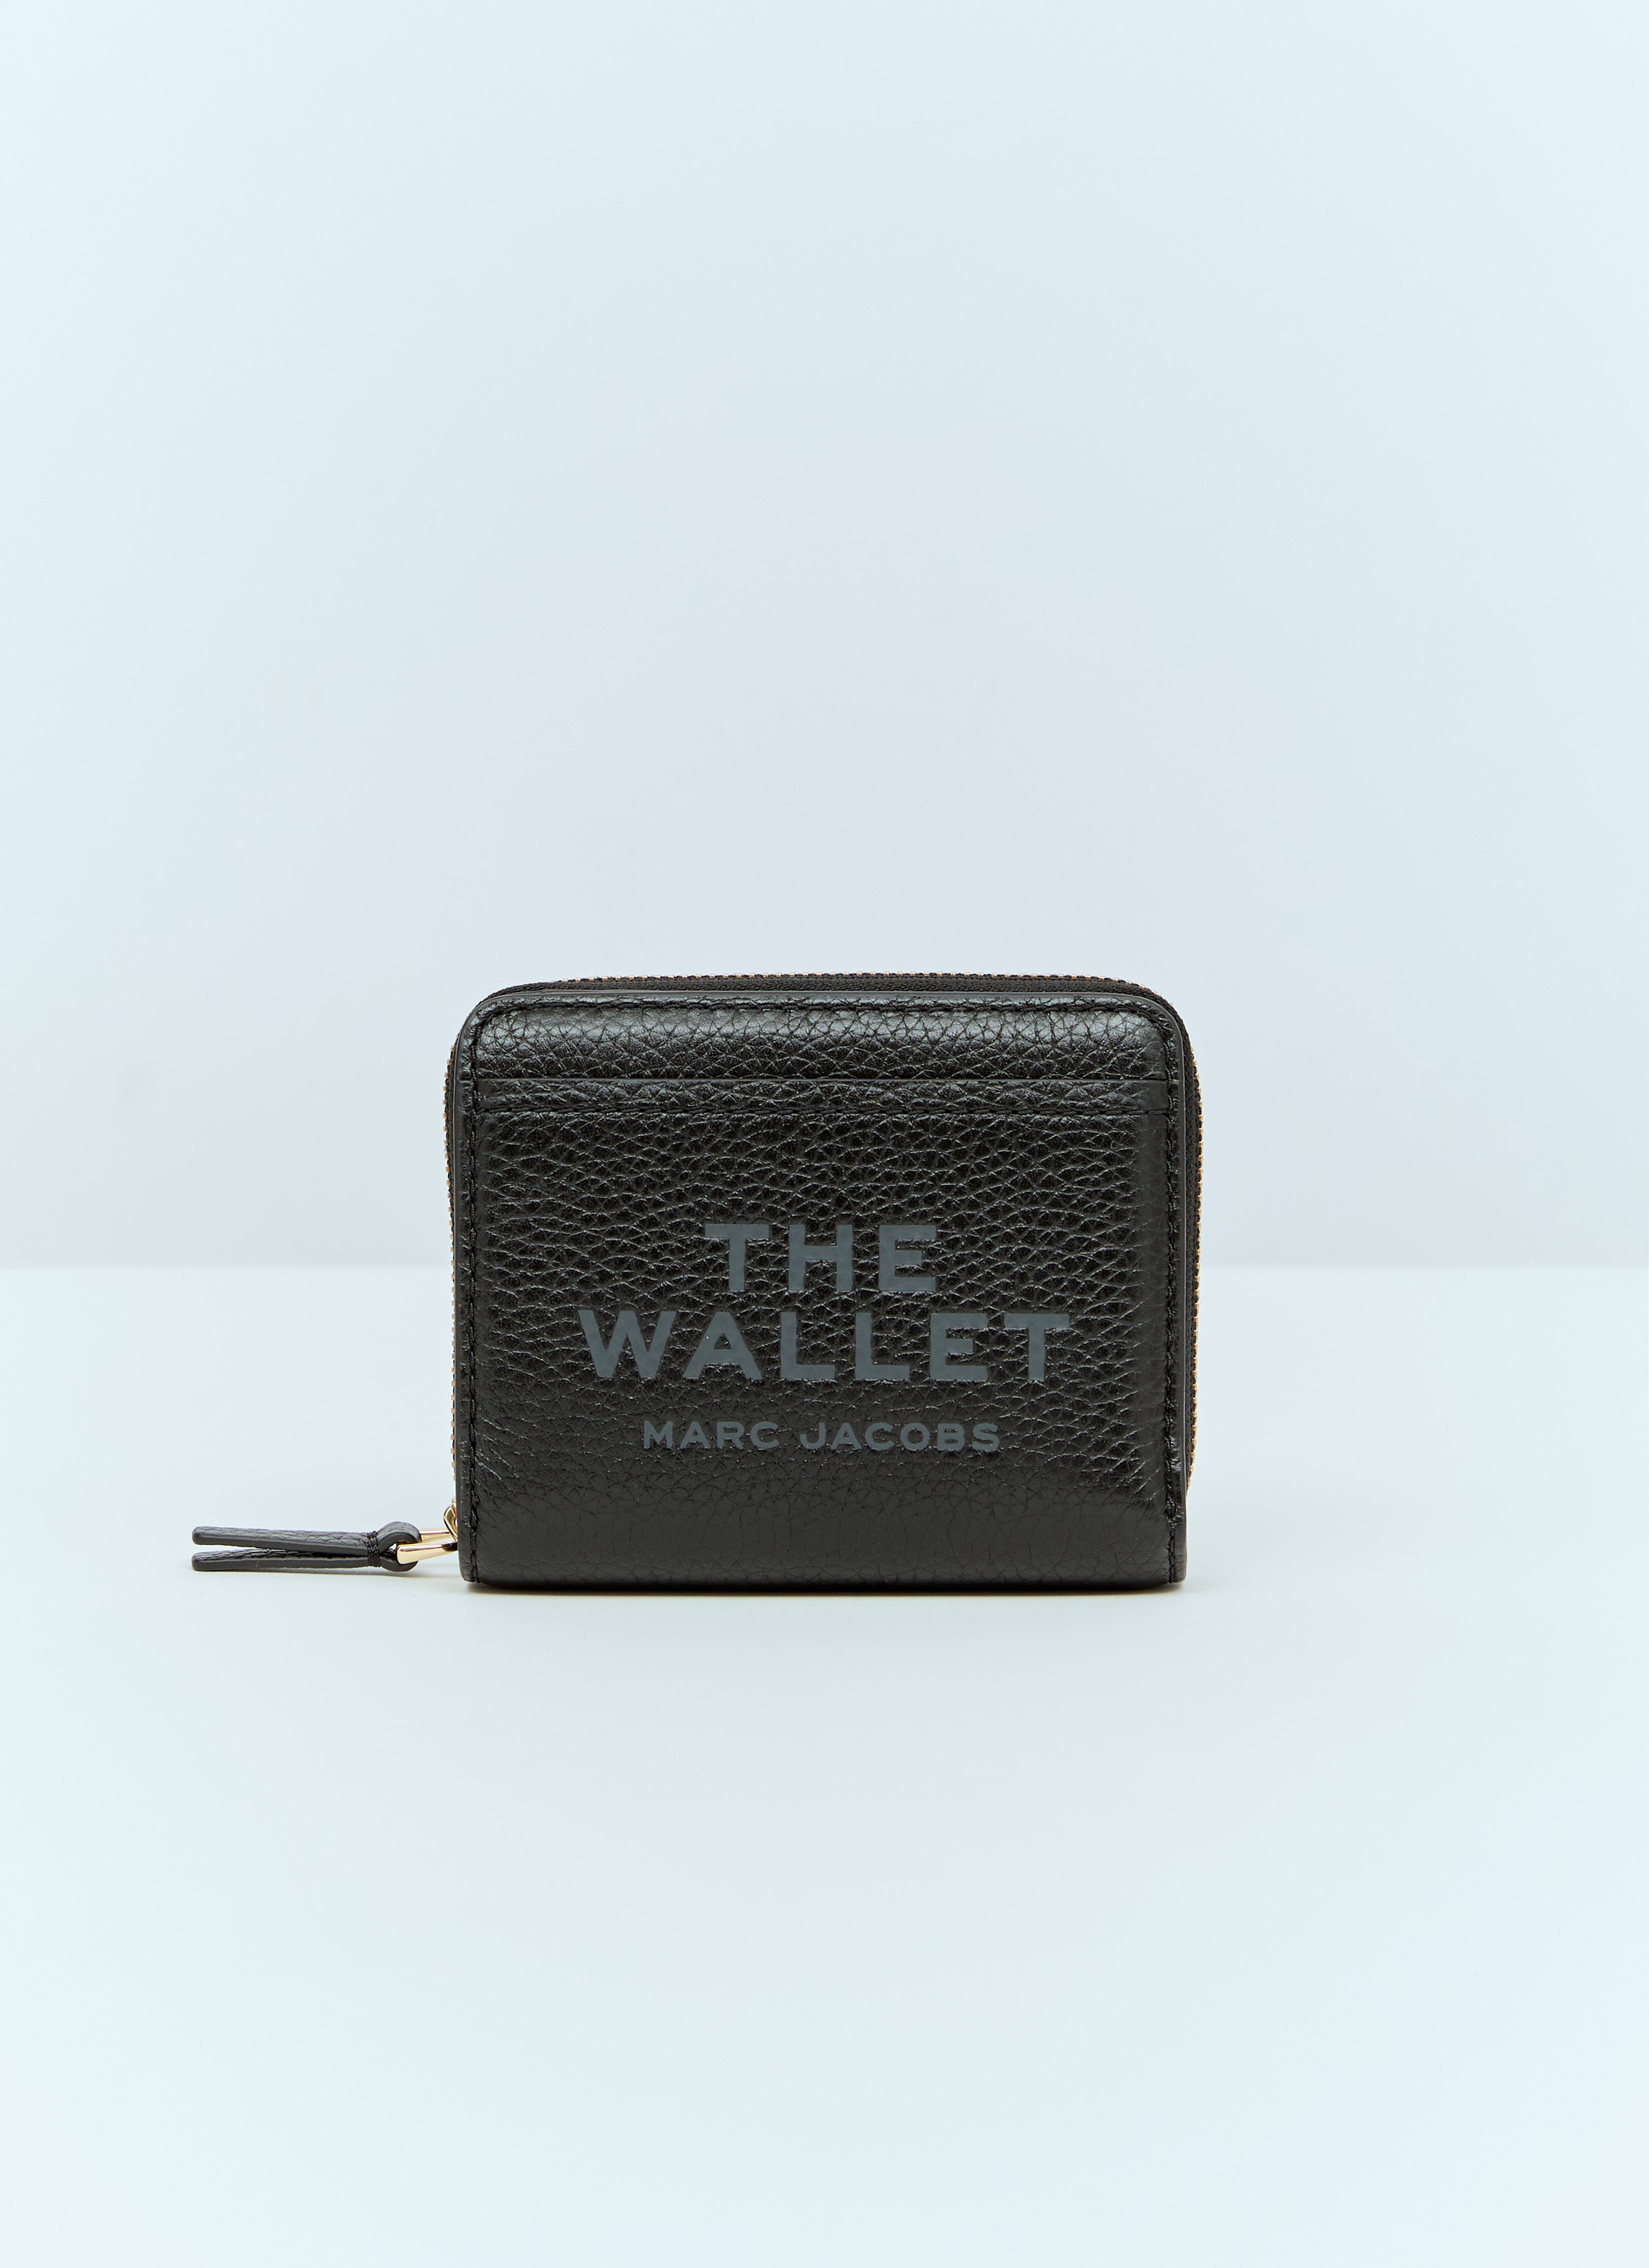 Marc Jacobs 皮革迷你袖珍钱包 黑色 mcj0255008